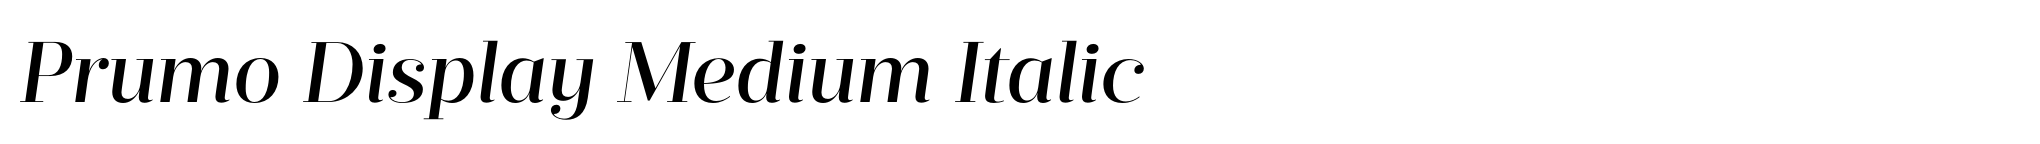 Prumo Display Medium Italic image